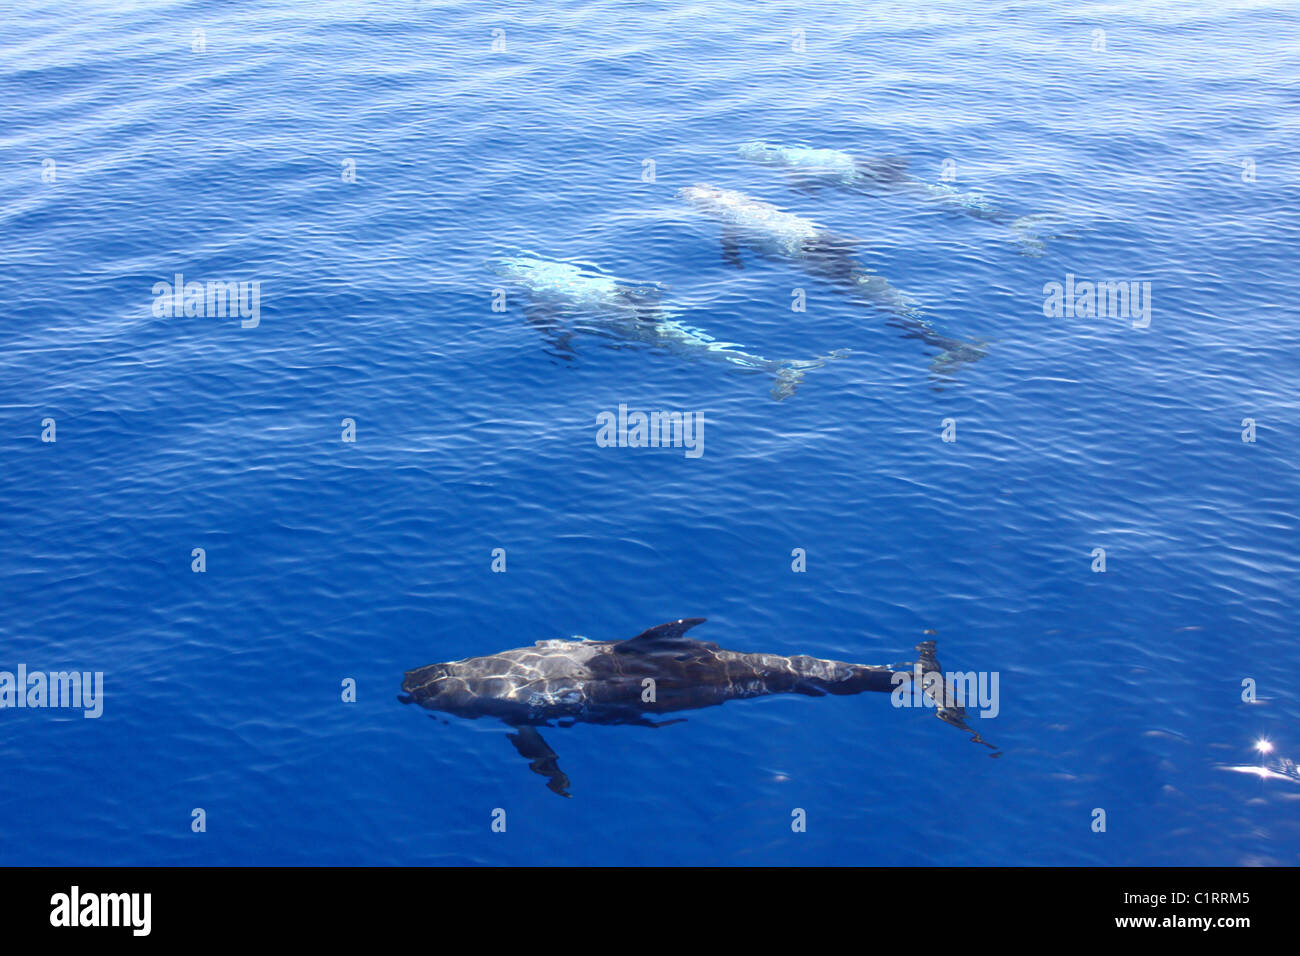 Schule von Delfinen im offenen Meer Stockfoto